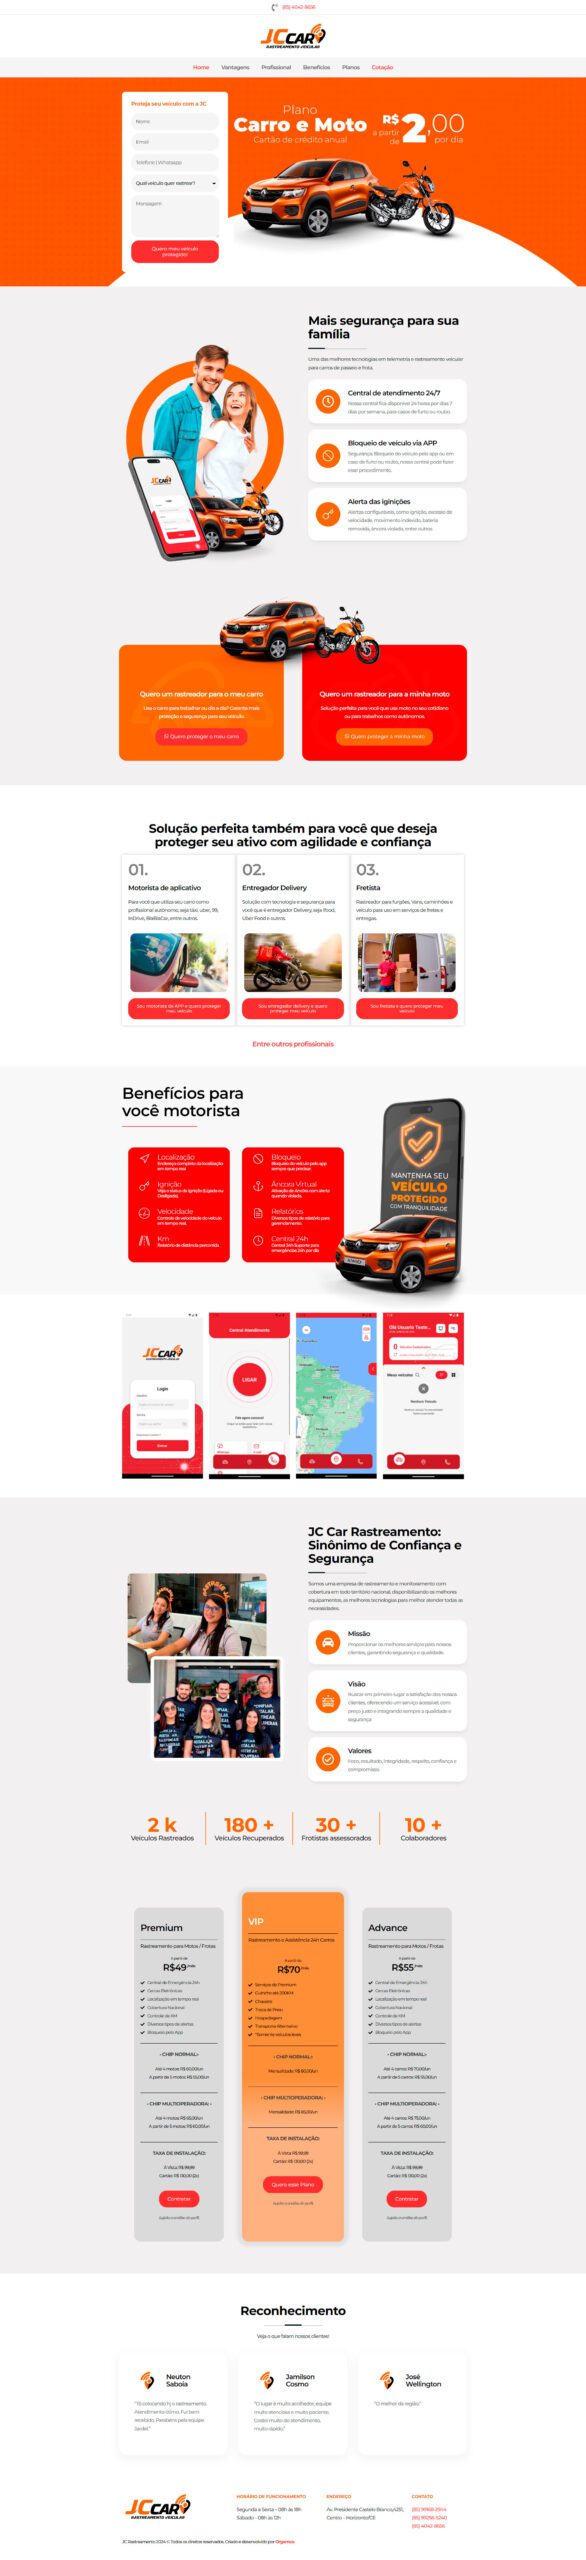 print-landing-page-jc-car-rastreamento-portfolio-cliente-portfolio-orgamco-marketing-digtial-fortaleza